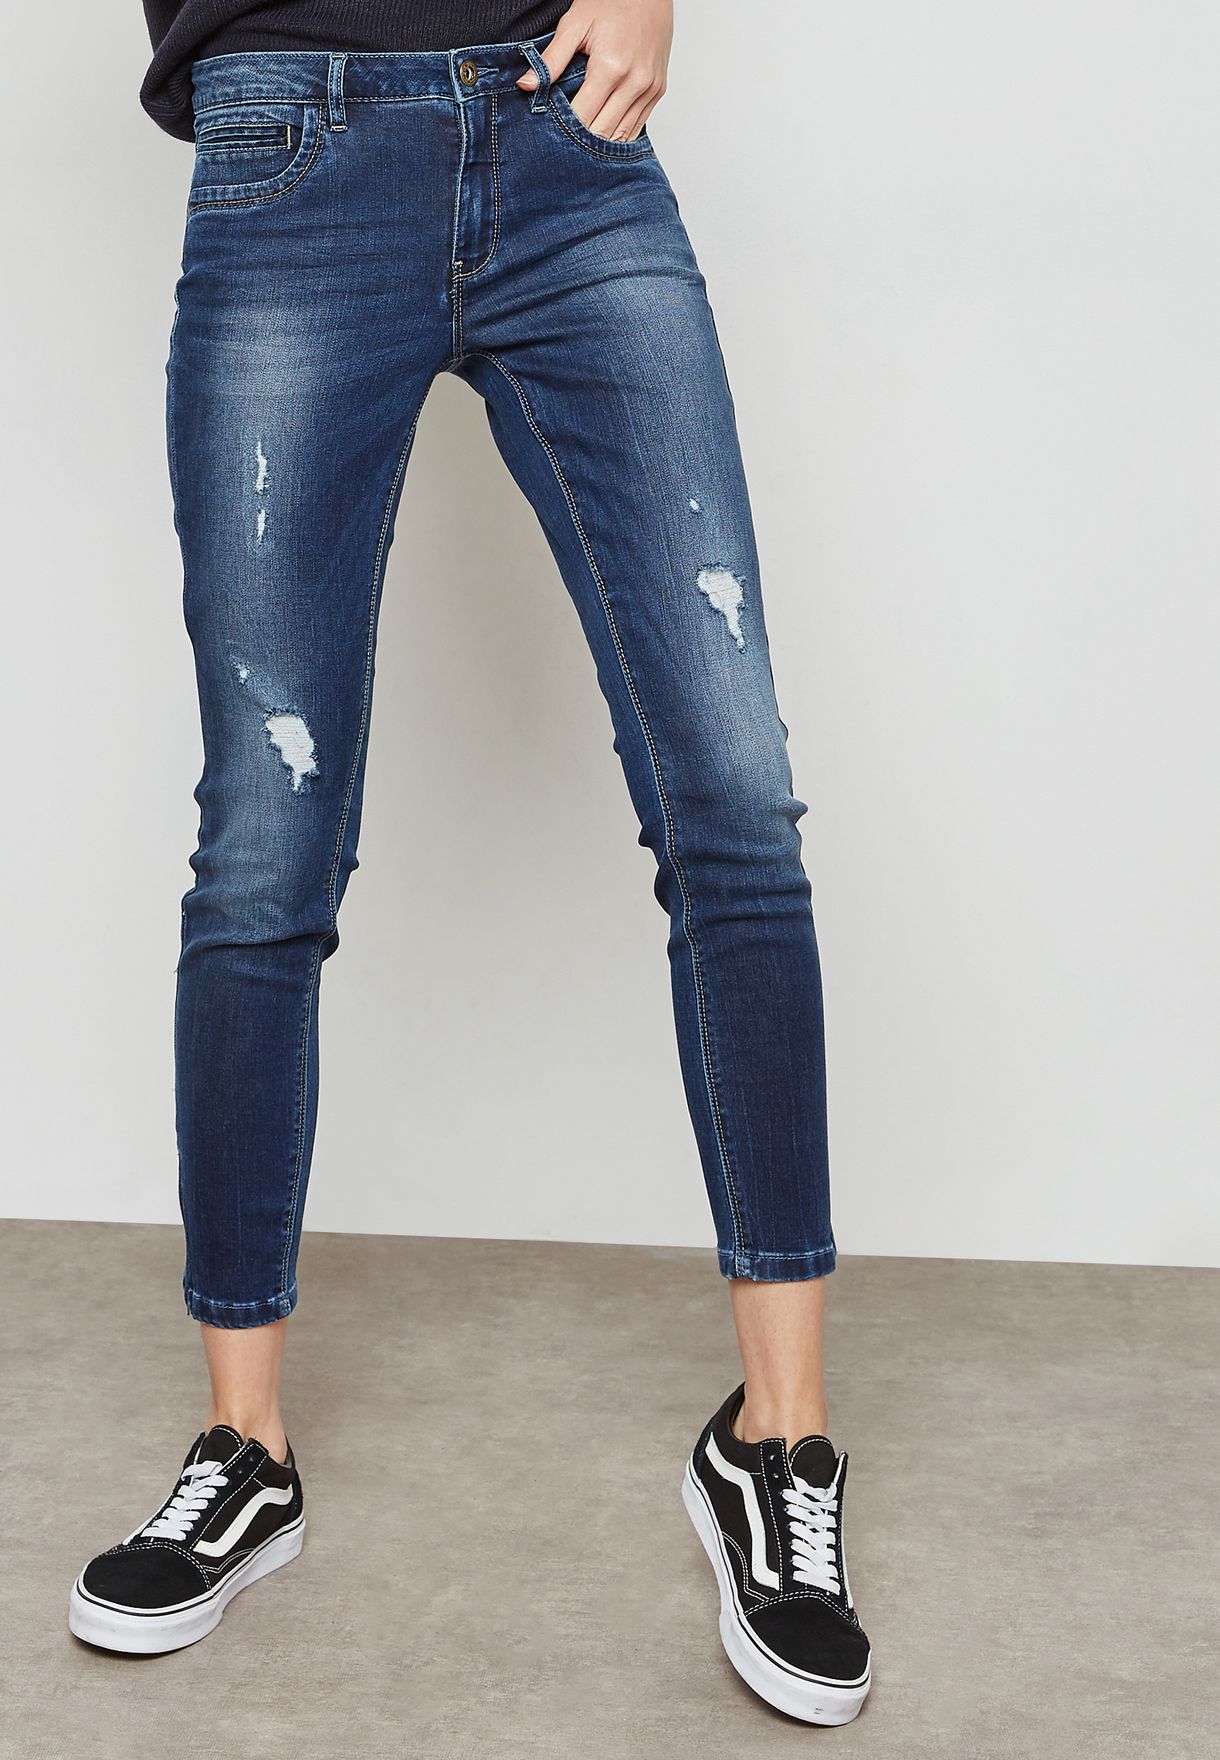 ankle grazer womens jeans